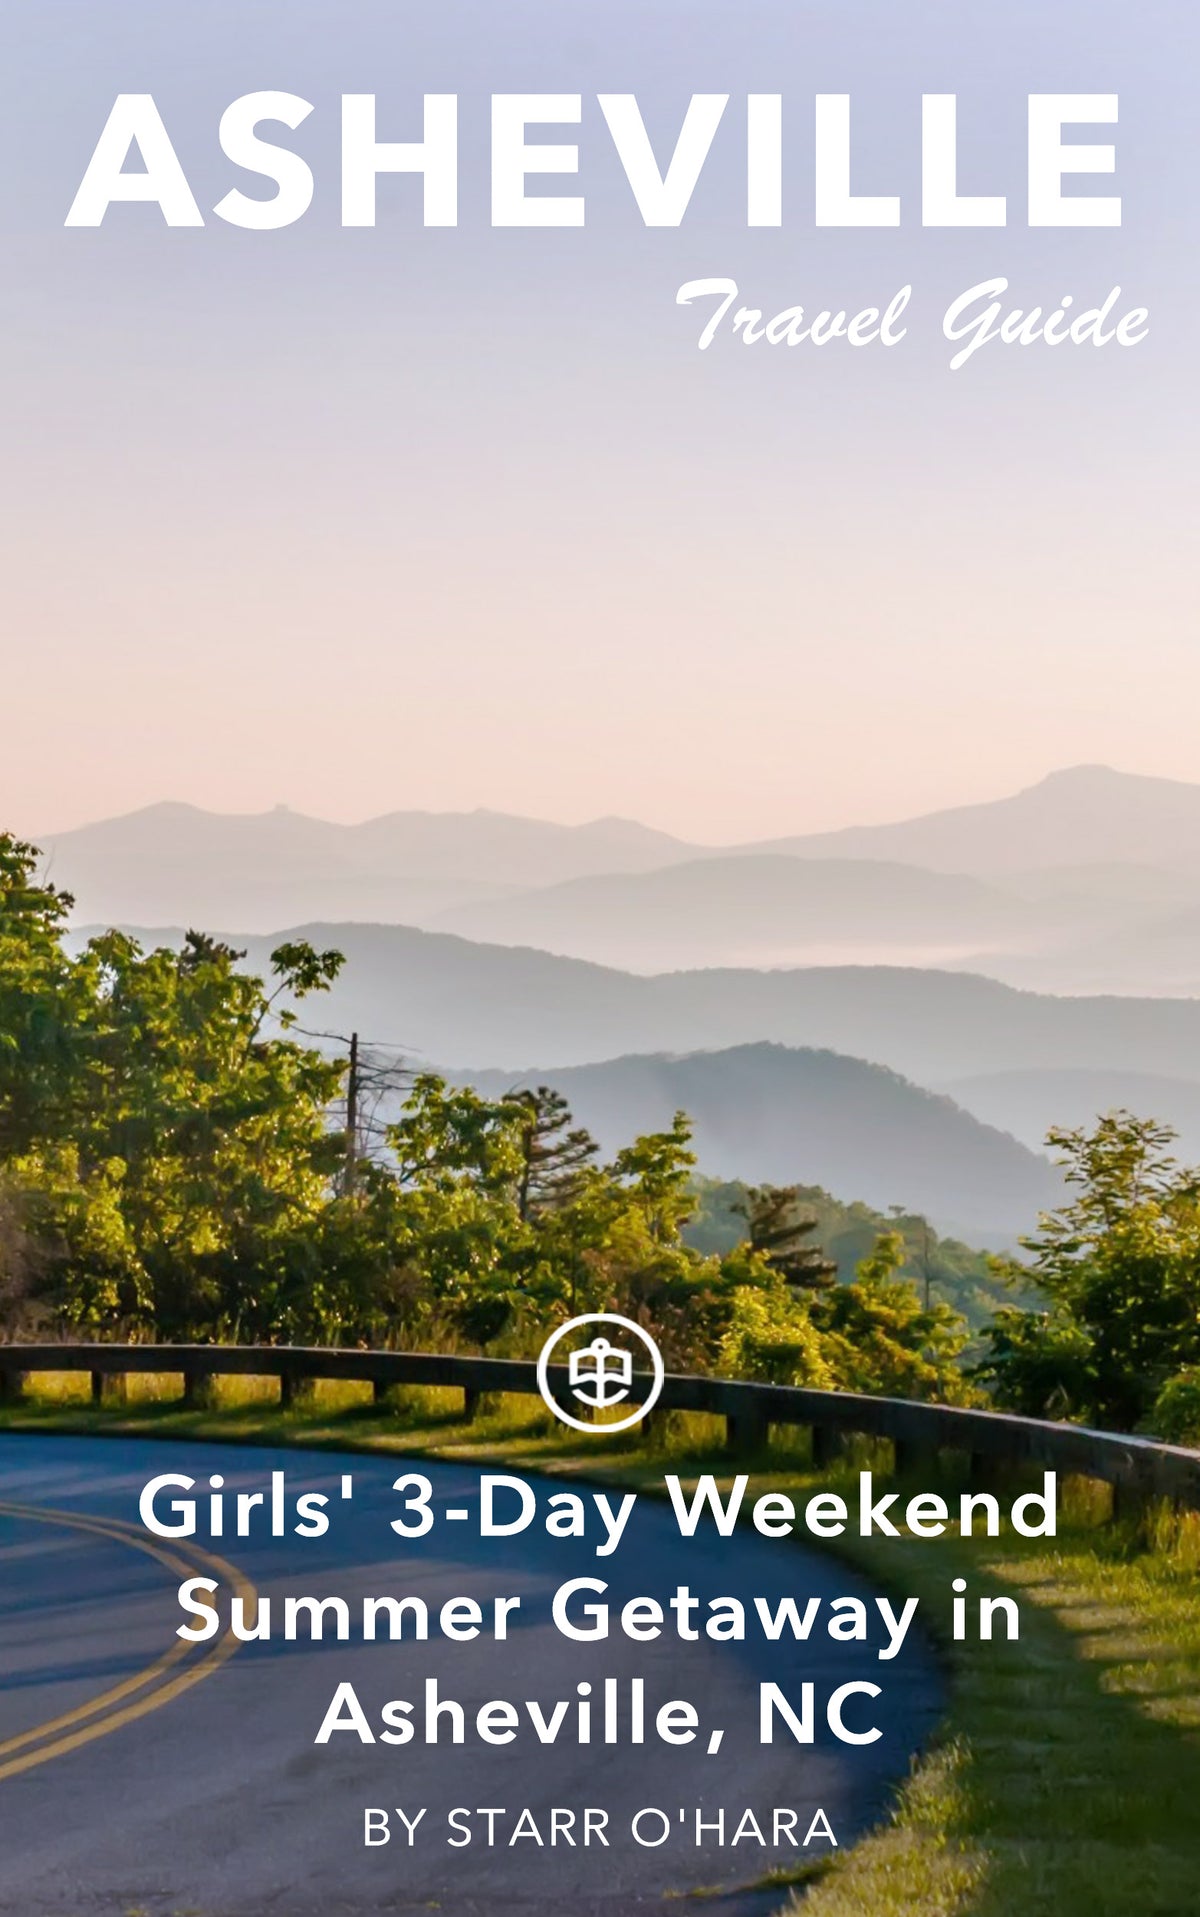 Girls' 3-Day Weekend Summer Getaway in Asheville, NC